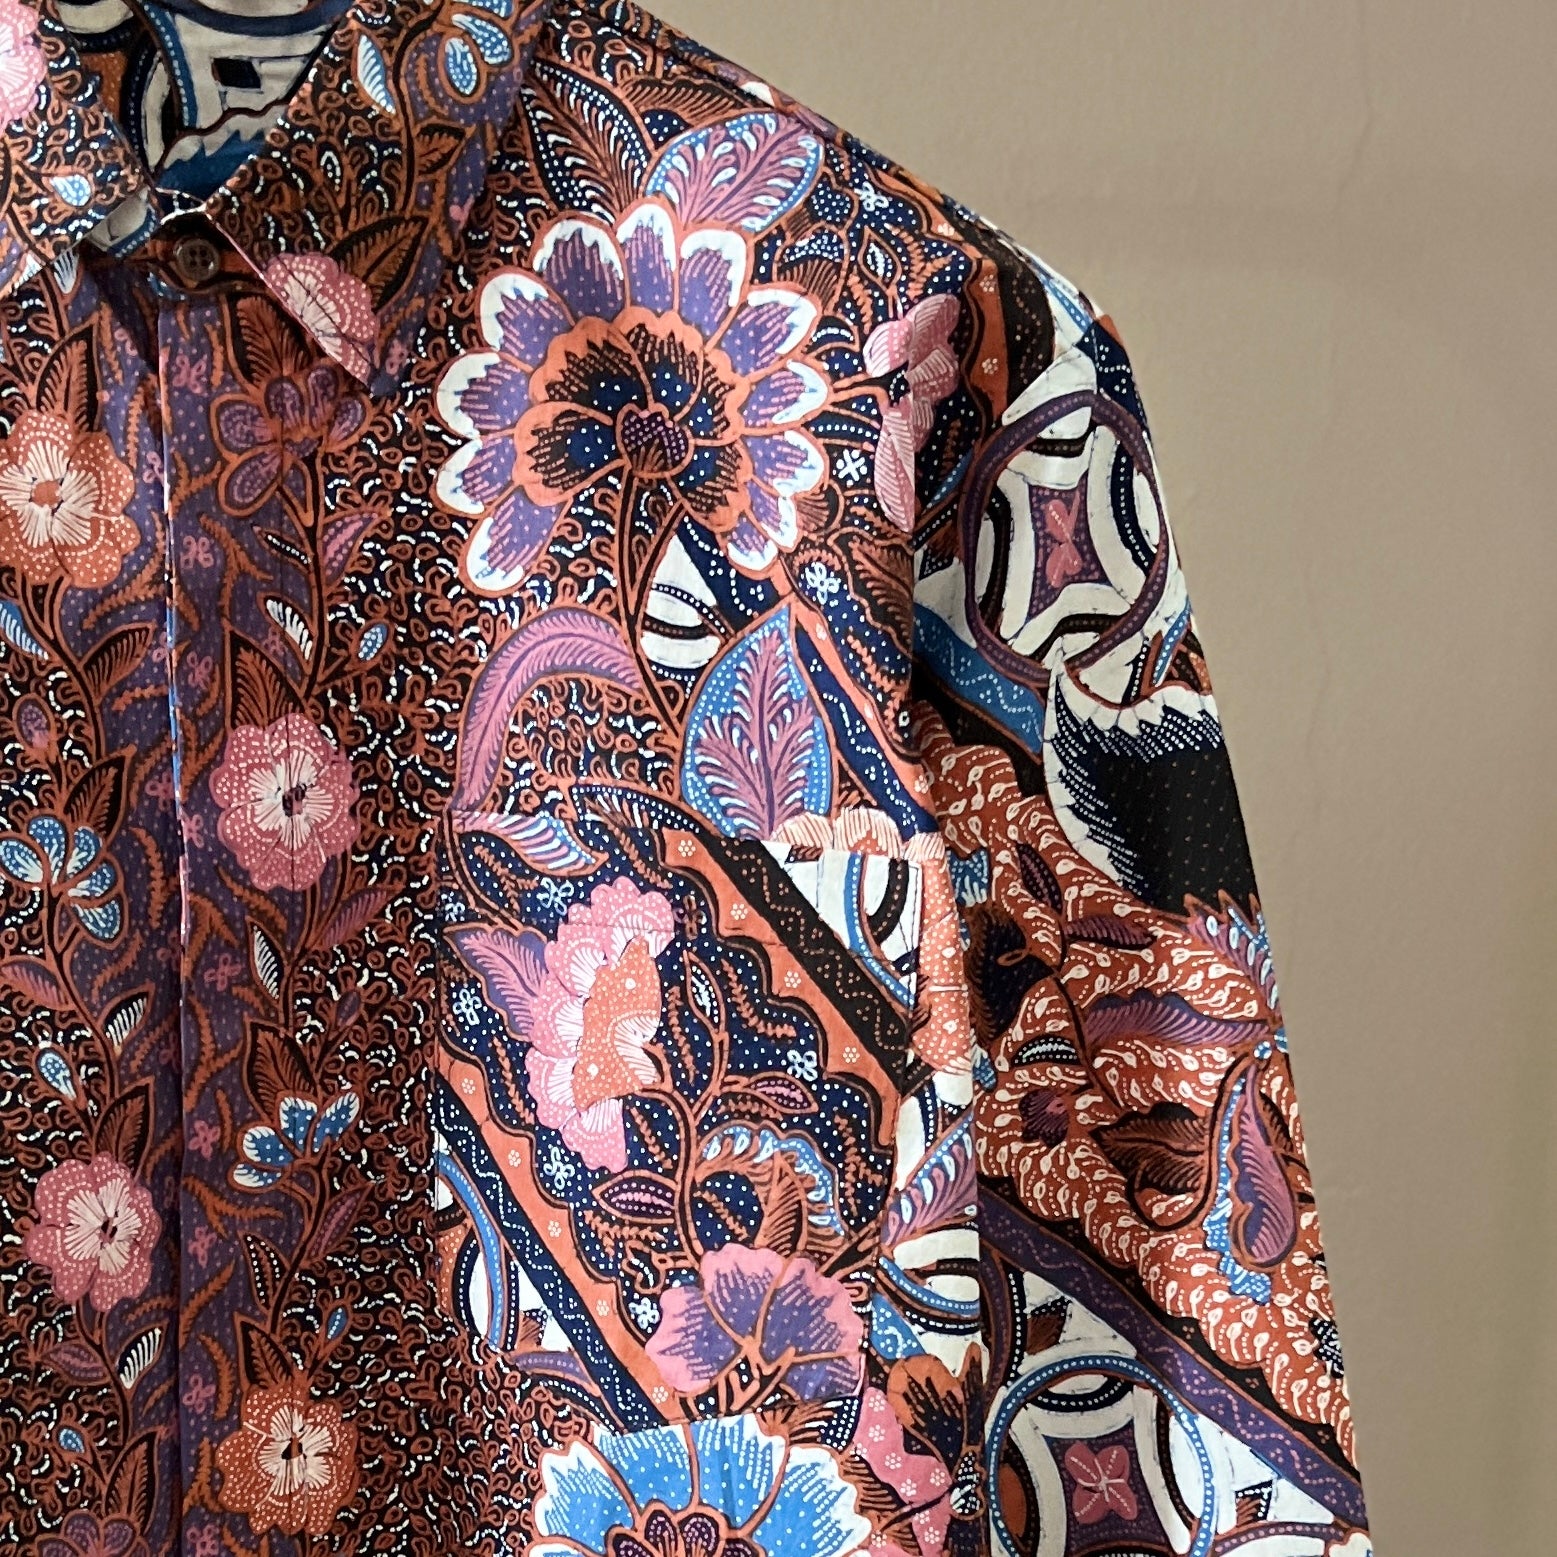 Premium Batik Tulis Superior Men's Long Sleeve Shirt - L